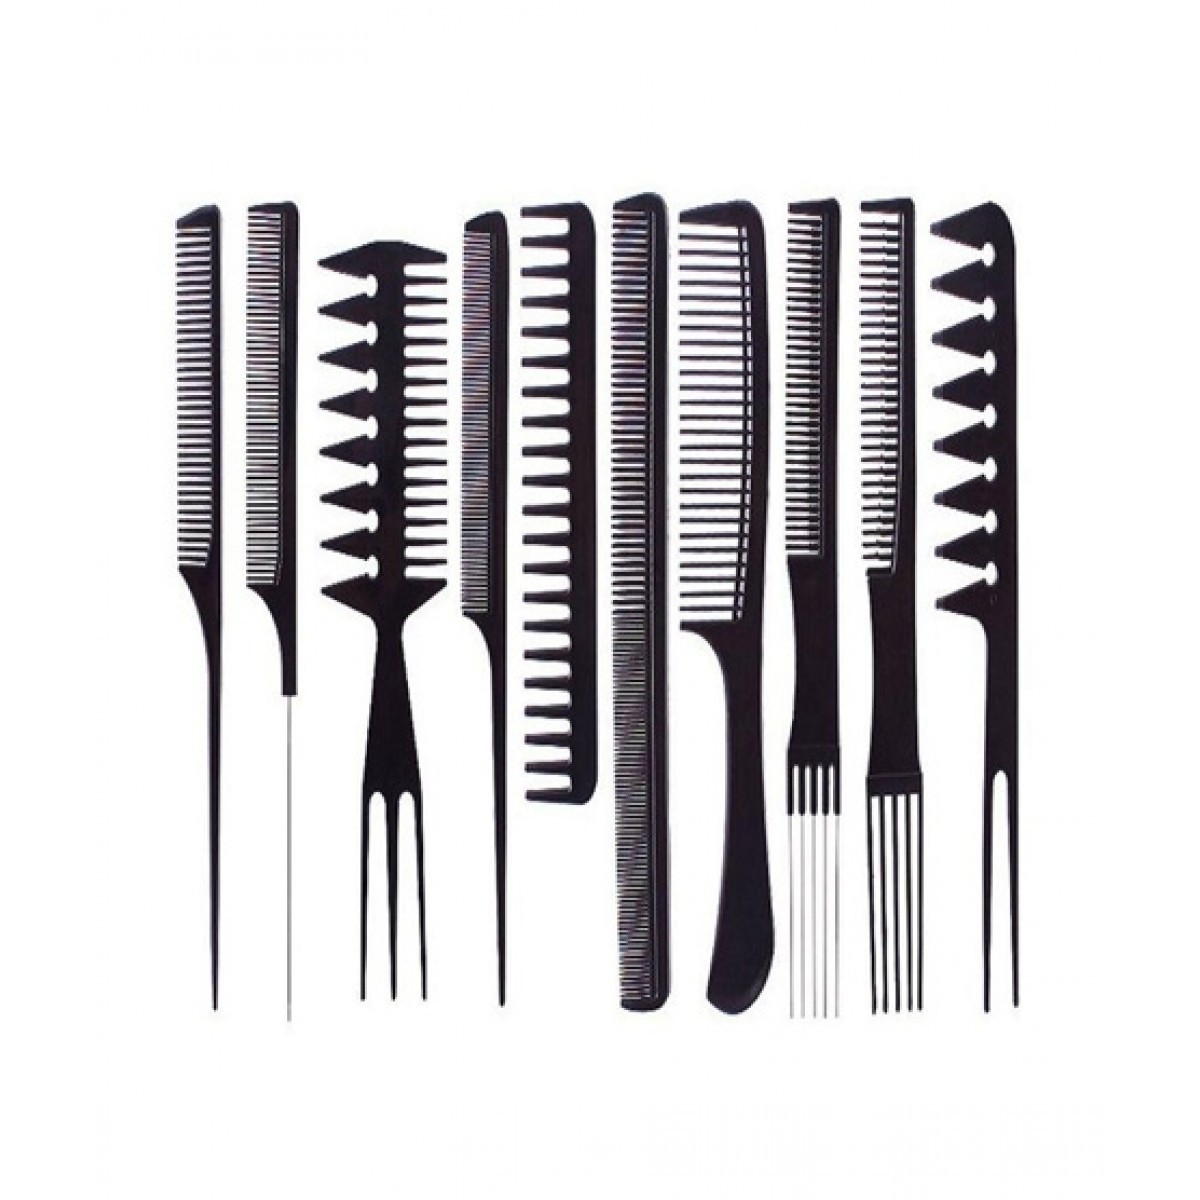 Parlour & Salon Use Hair Comb Set